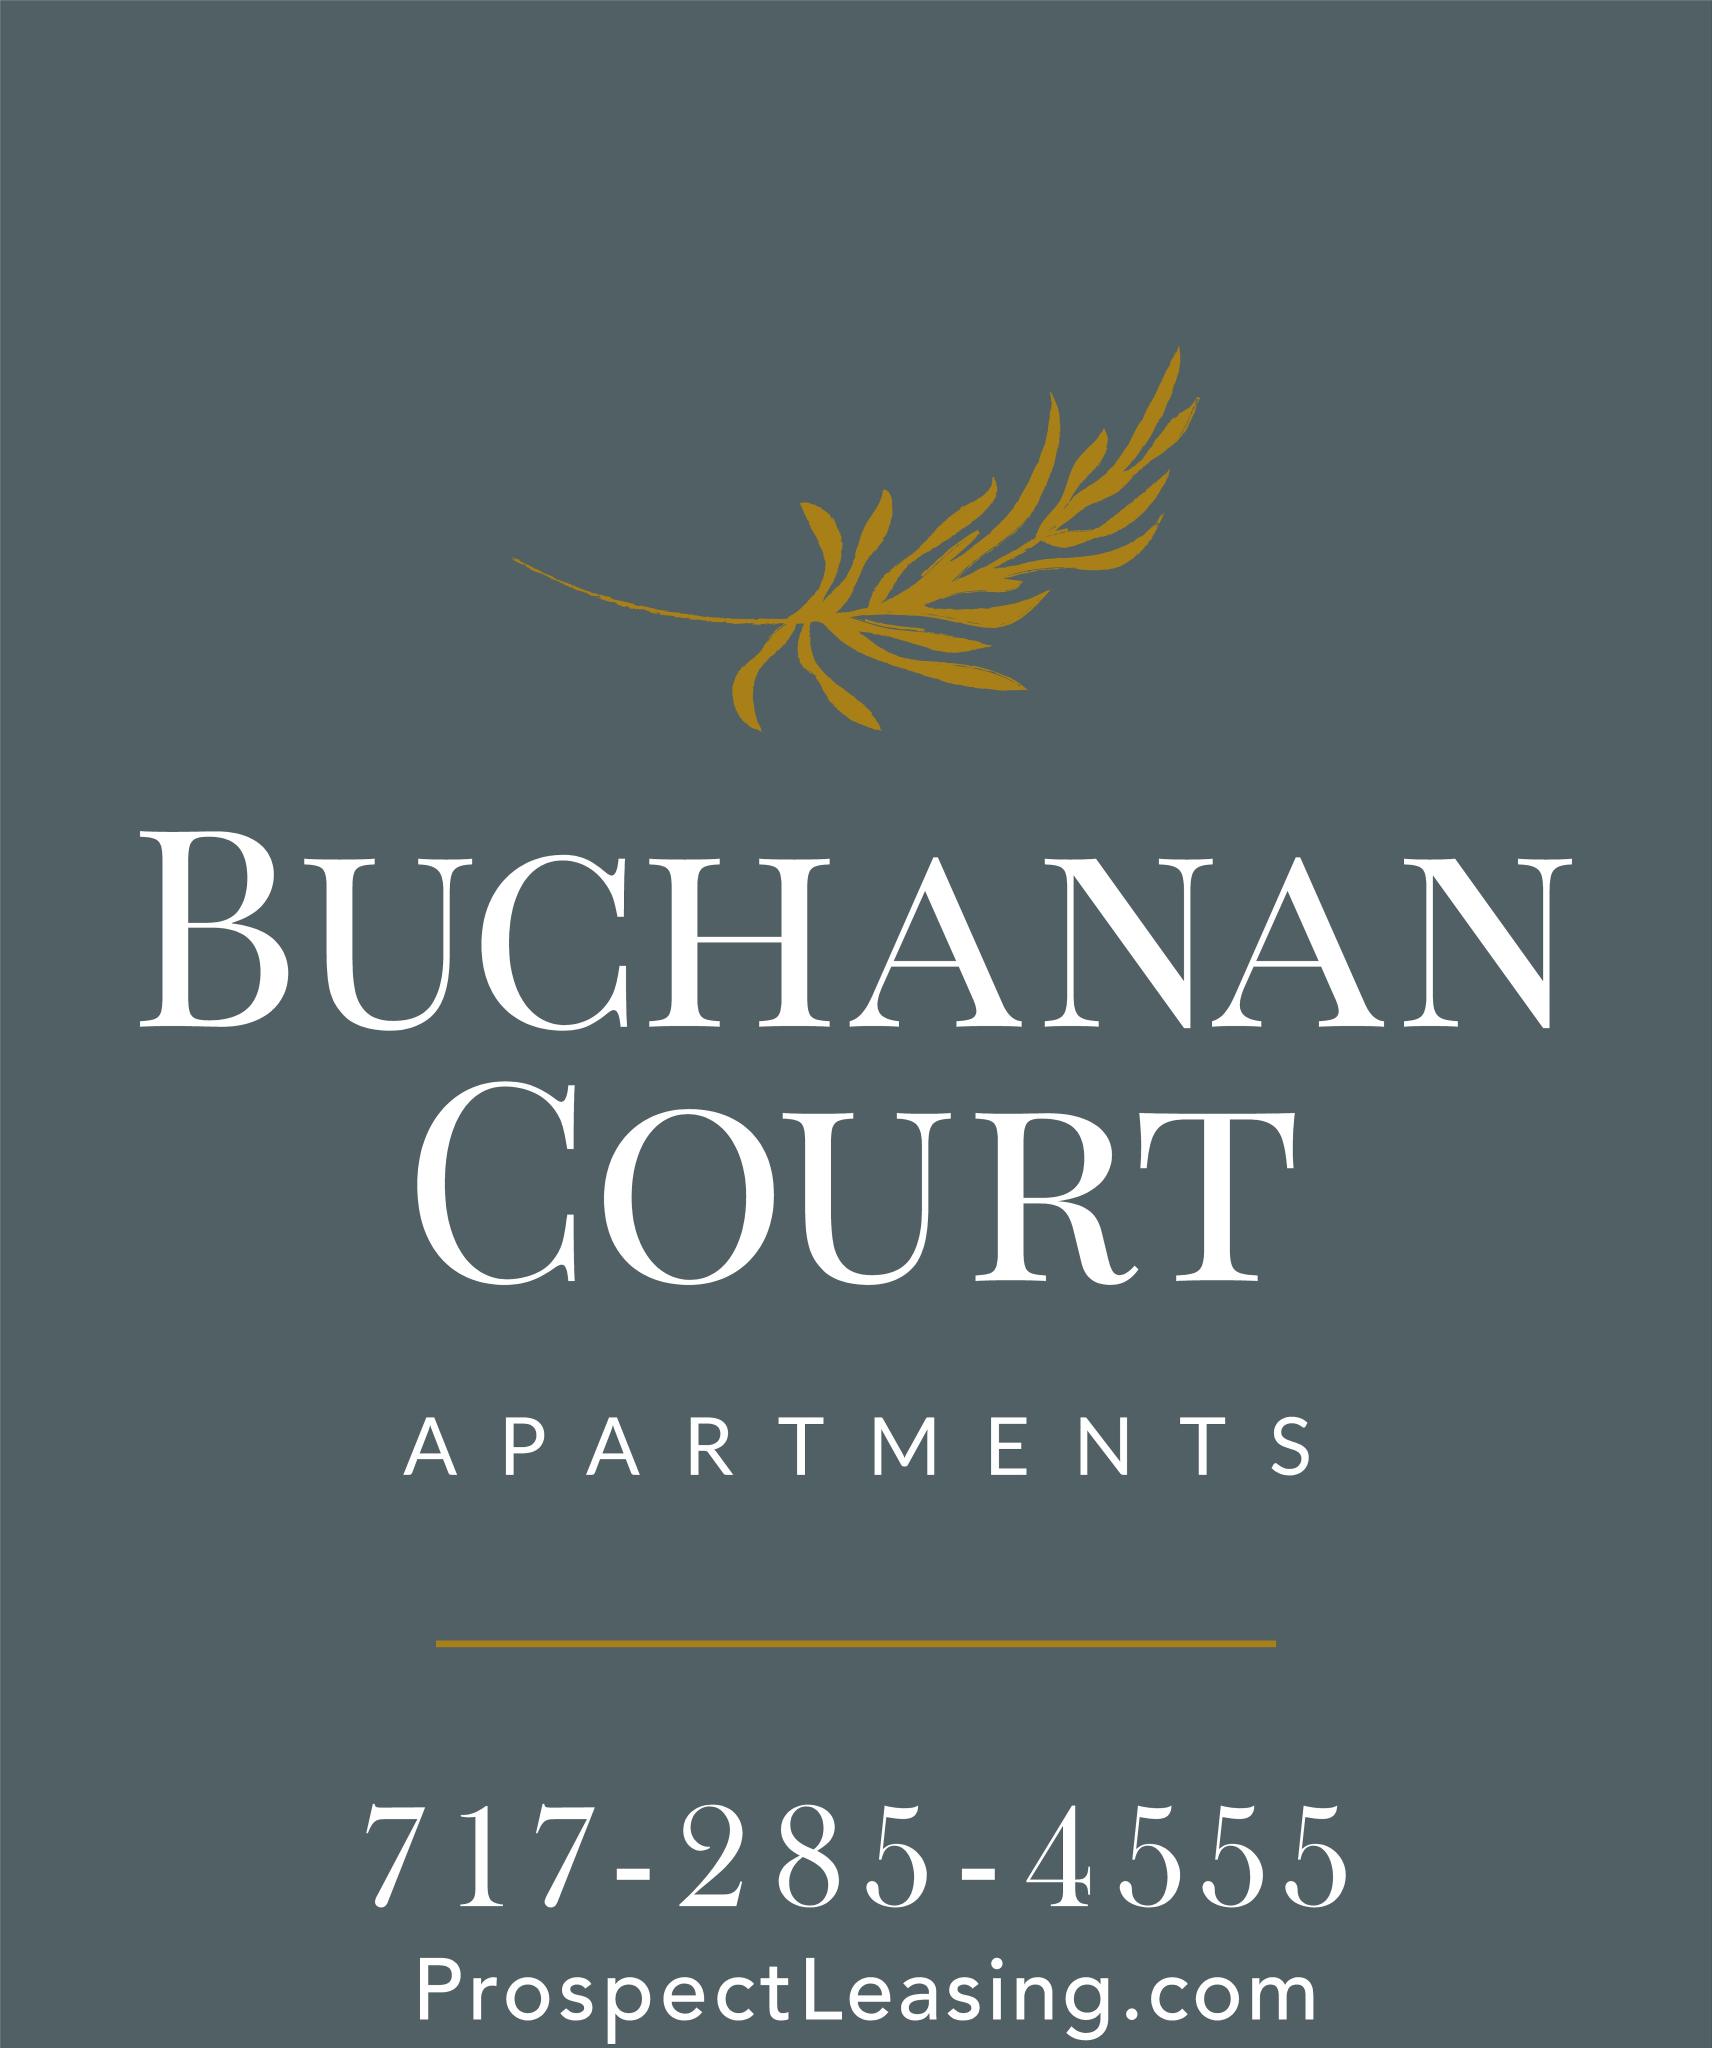 Buchanan Court Apartments